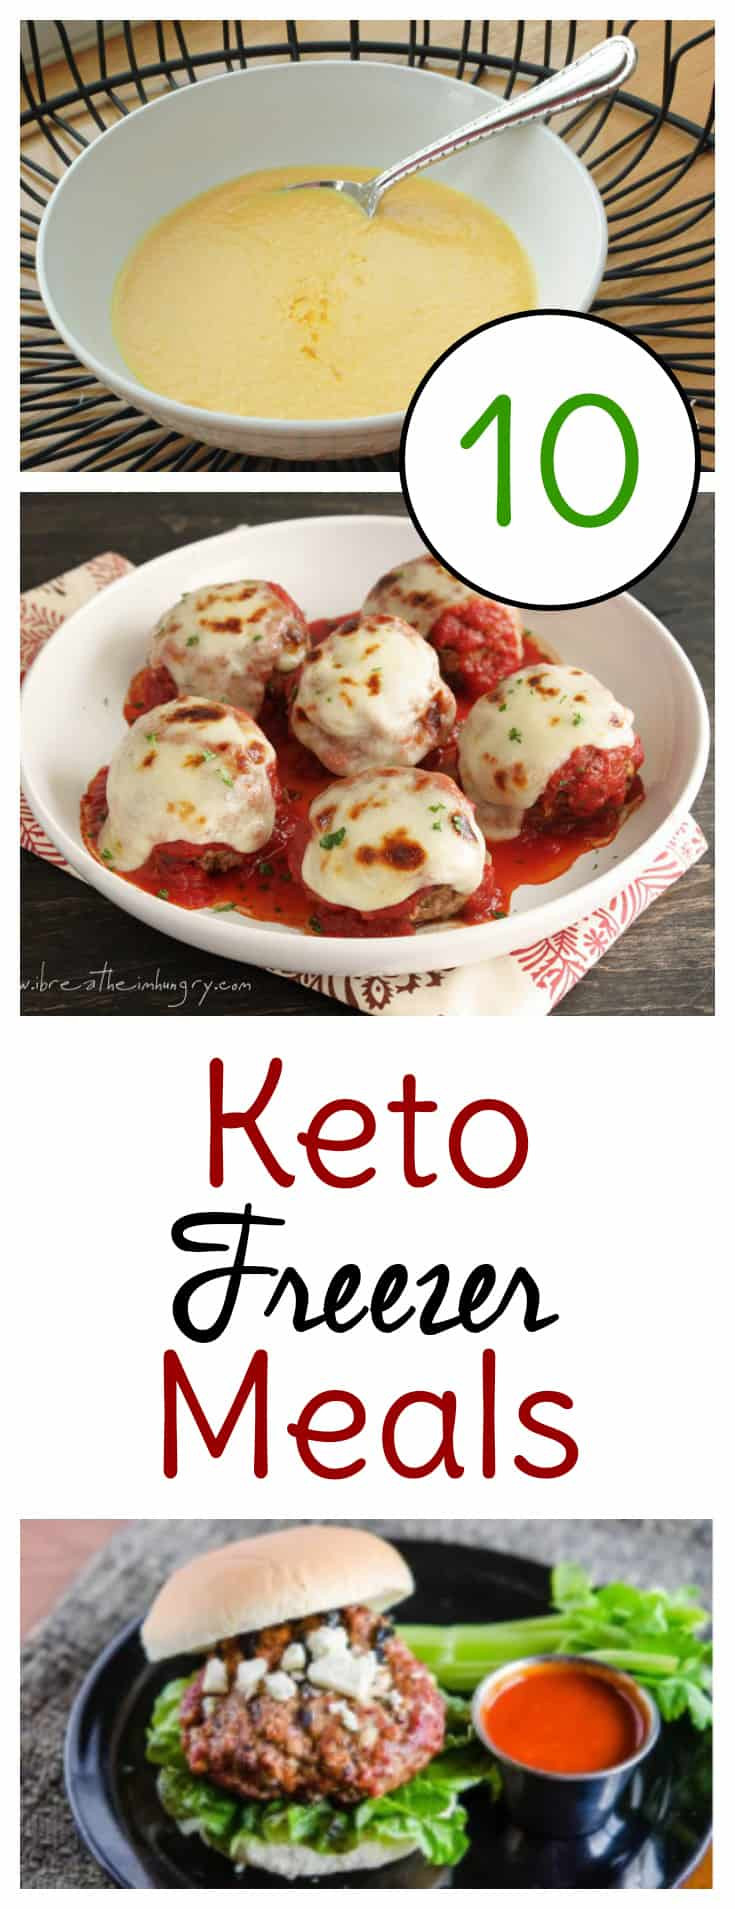 Keto Diet Prepared Meals
 Keto Freezer Meals to Make Ahead Sweet T Makes Three